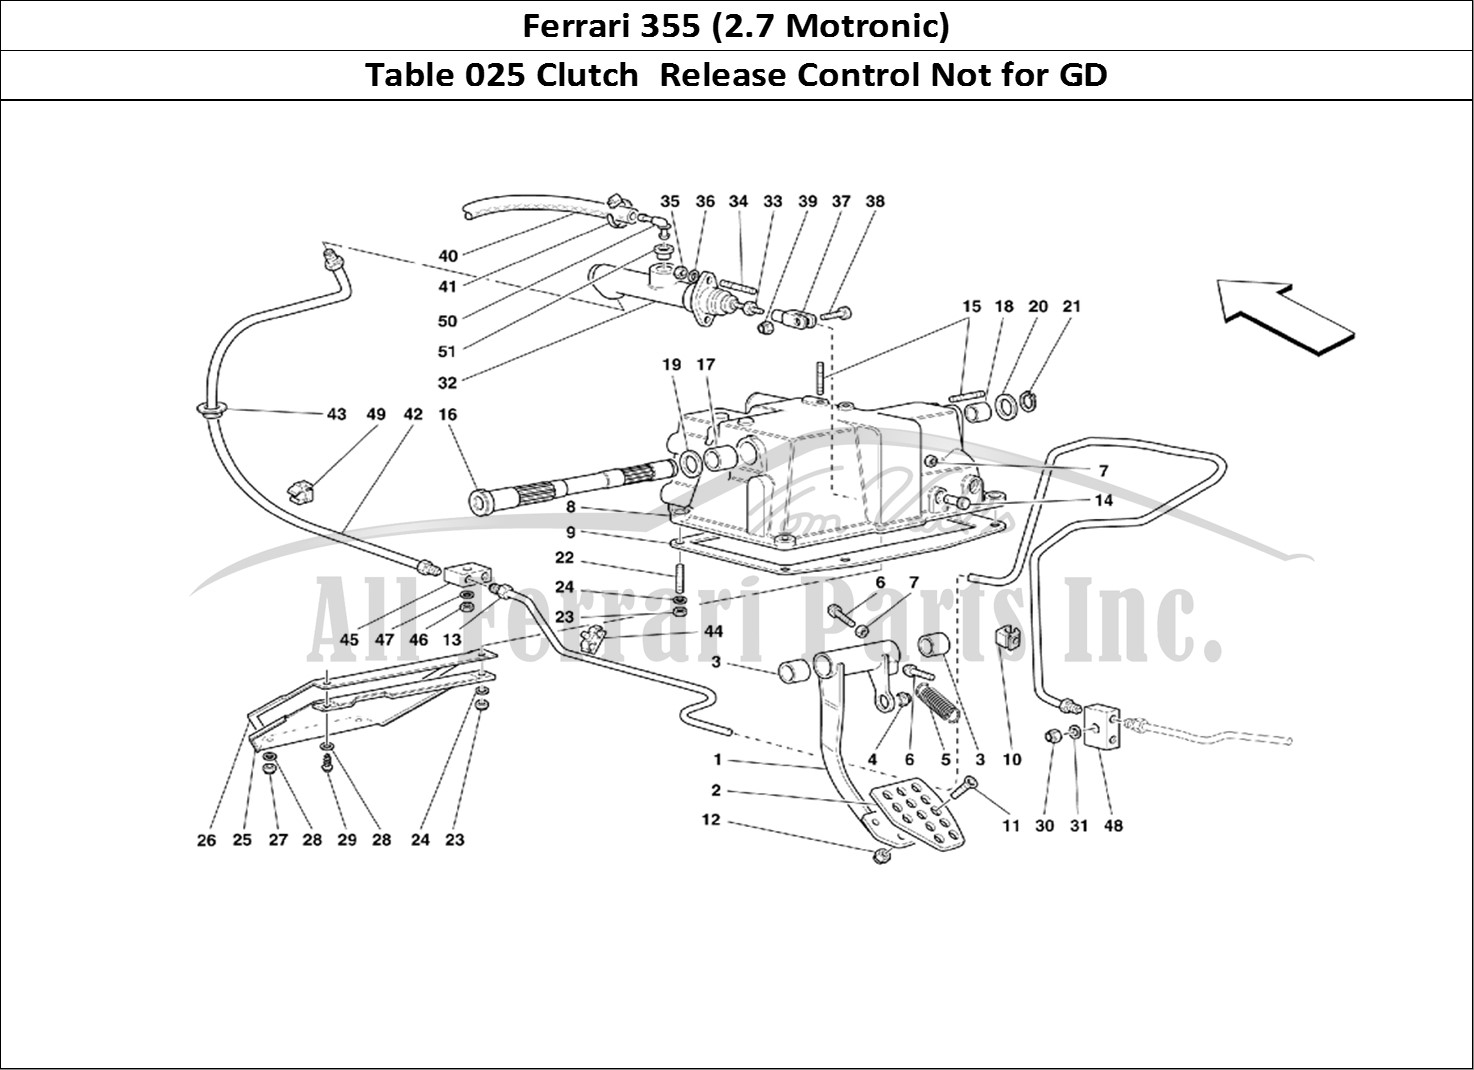 Ferrari Parts Ferrari 355 (2.7 Motronic) Page 025 Clutch Release Control -N